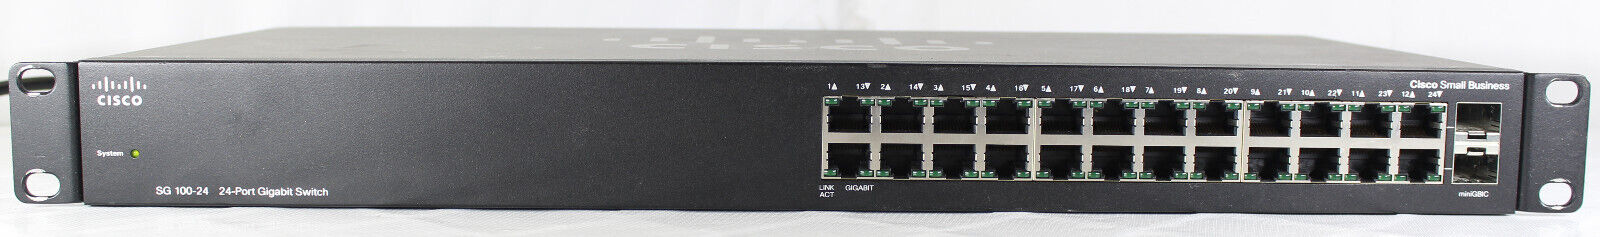 Cisco SG100-24 24-Port Gigabit Ethernet Switch SR2024T 